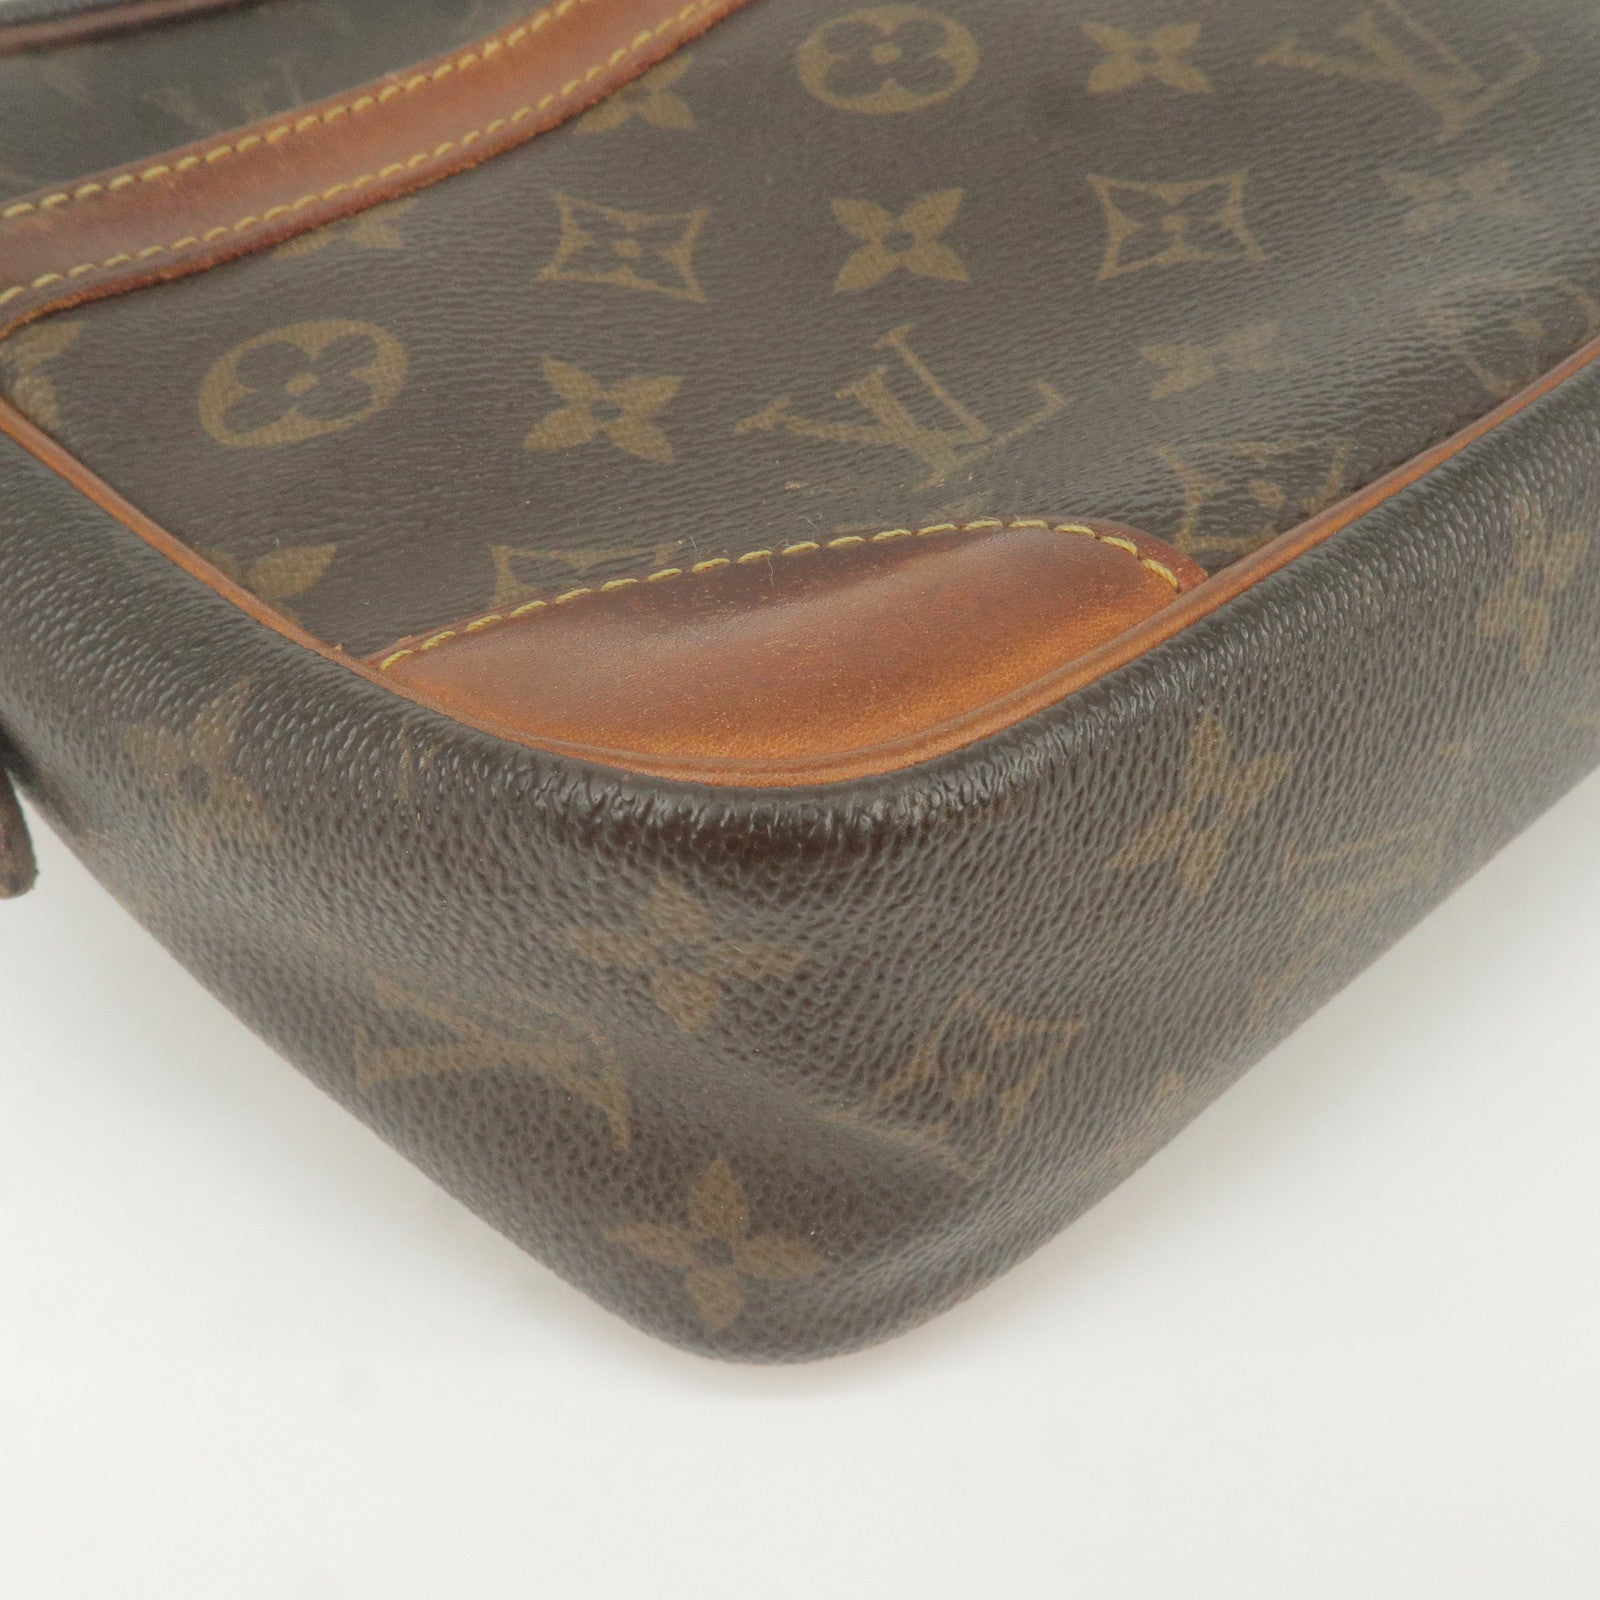 Louis Vuitton - Crocodile leather Cluny Bag, Luxury Fashion